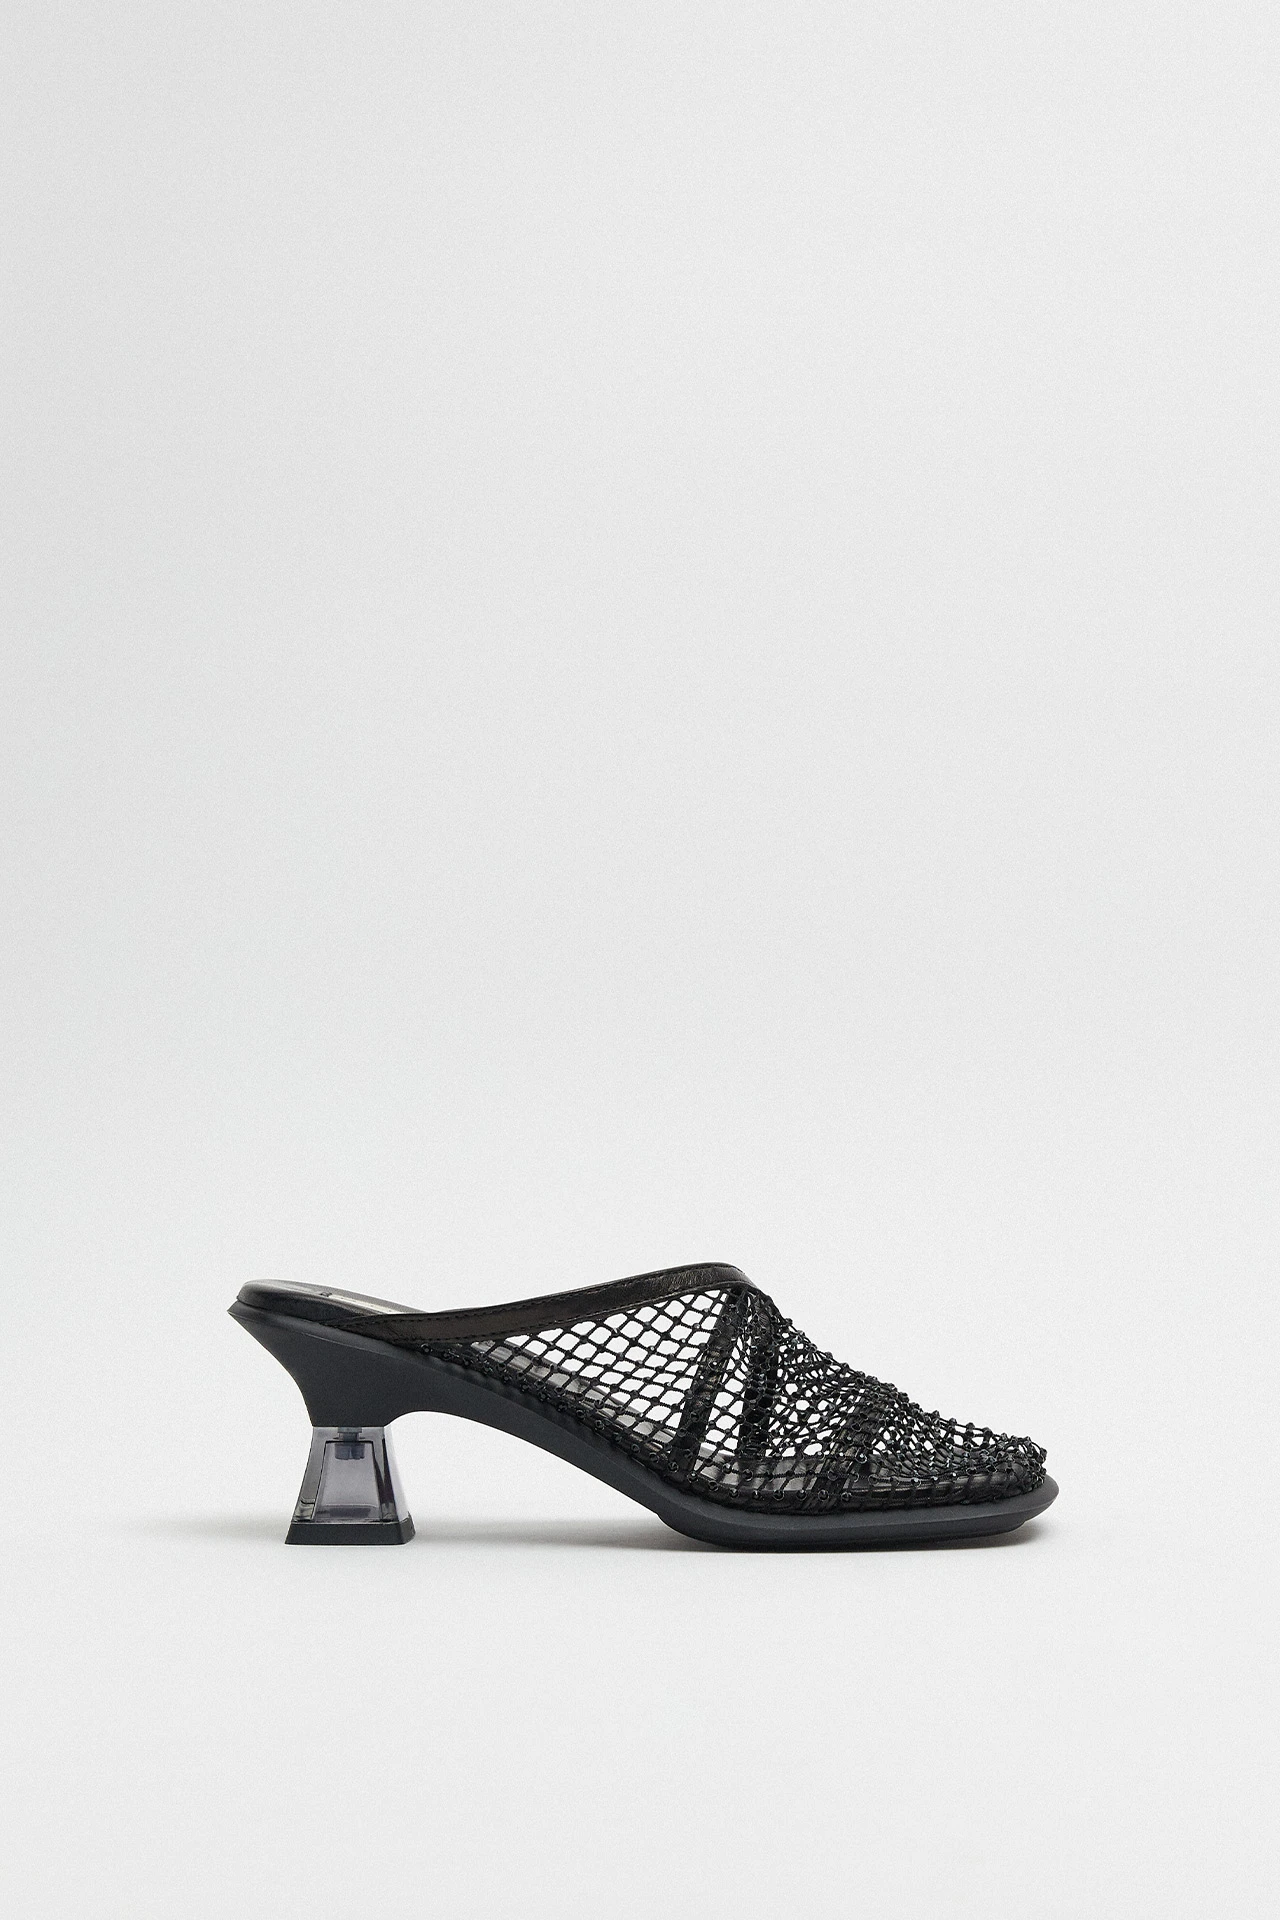 Miista-Isadora-Black-Mule-Sandals-01